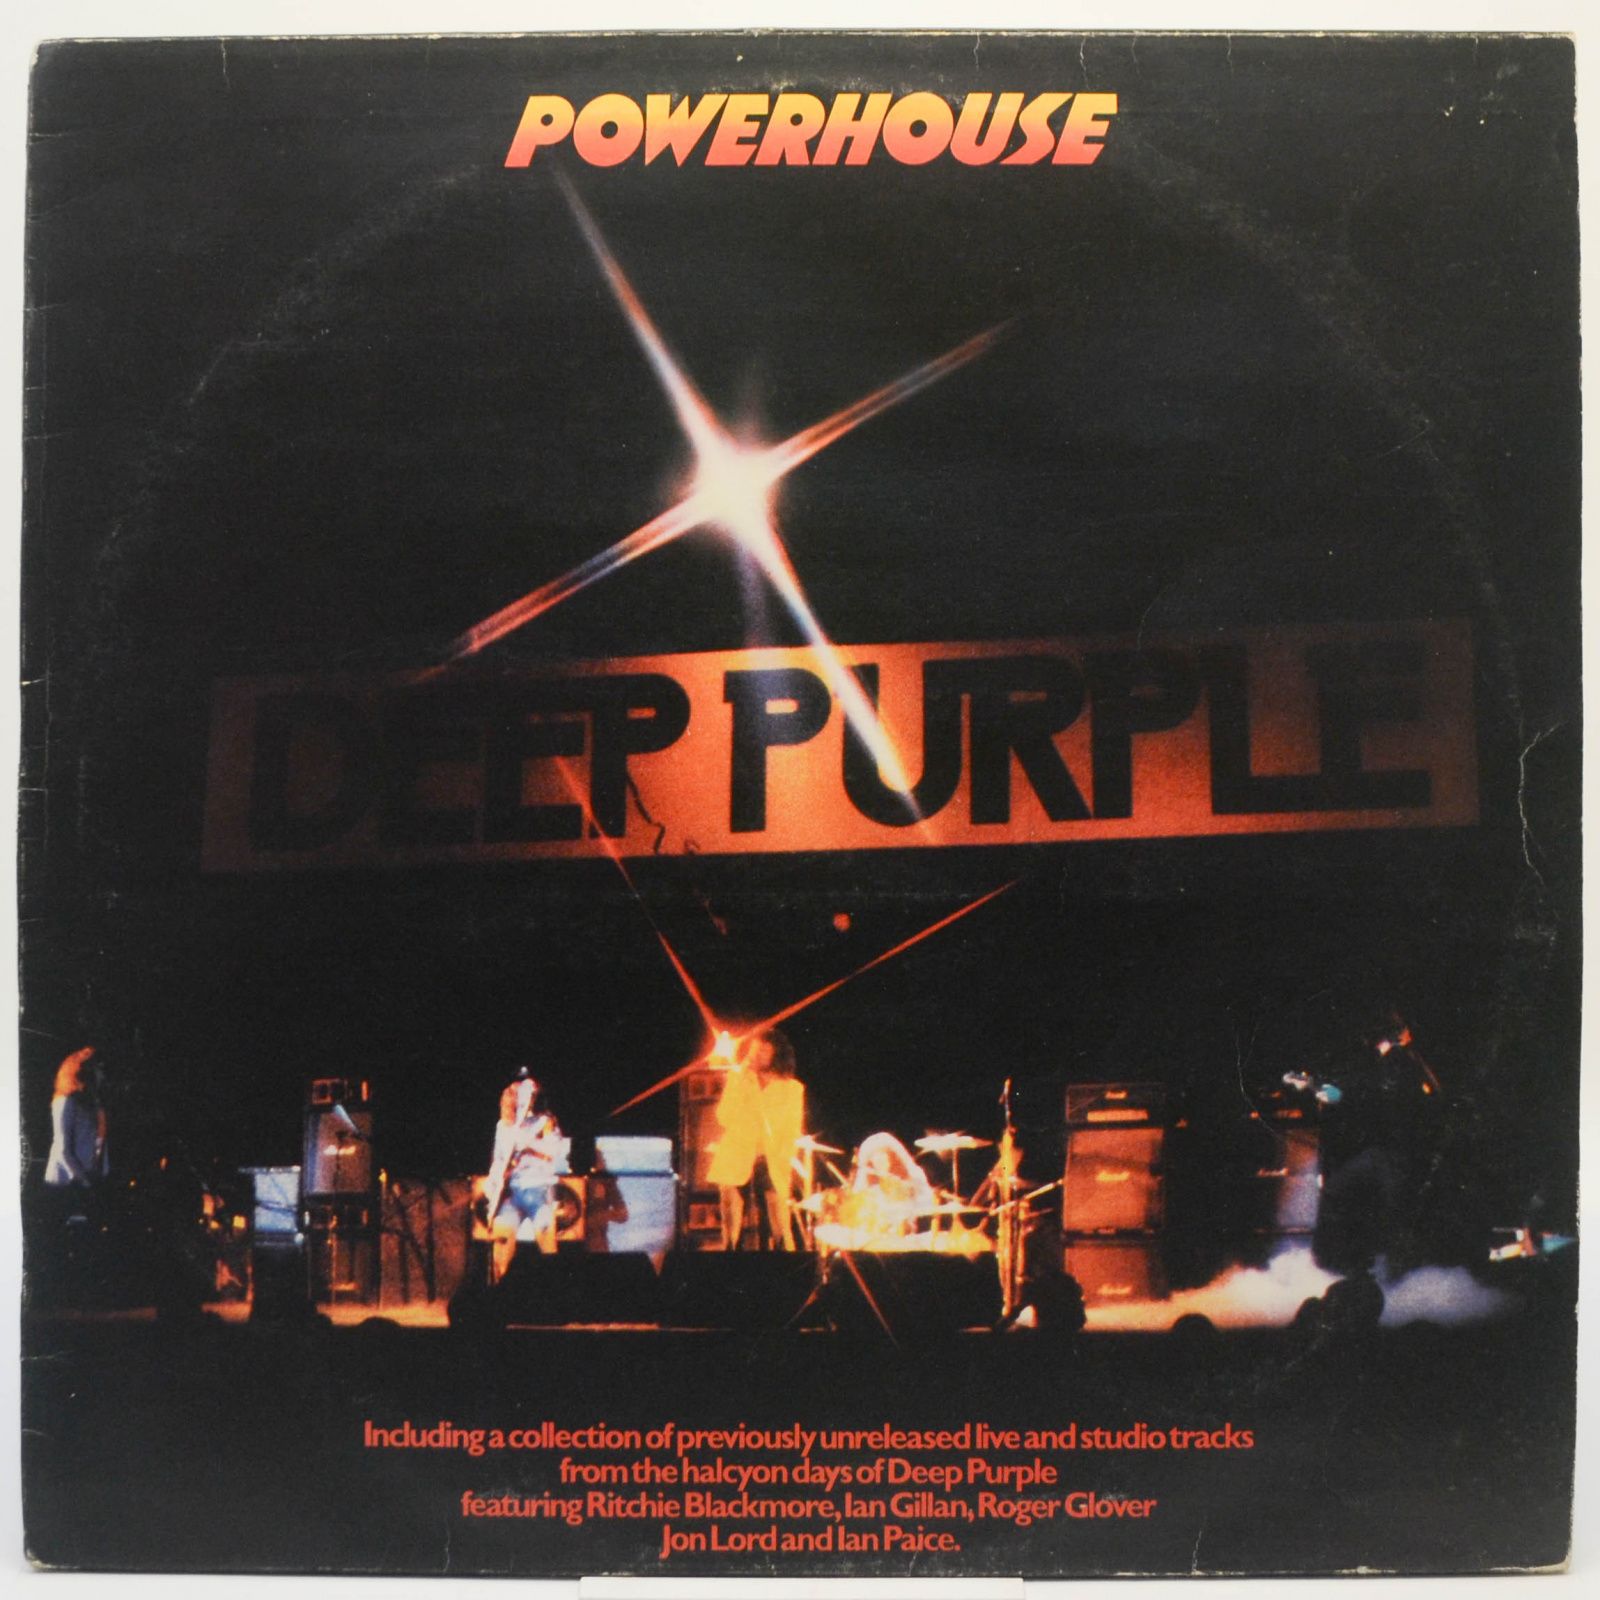 Powerhouse (UK), 1977